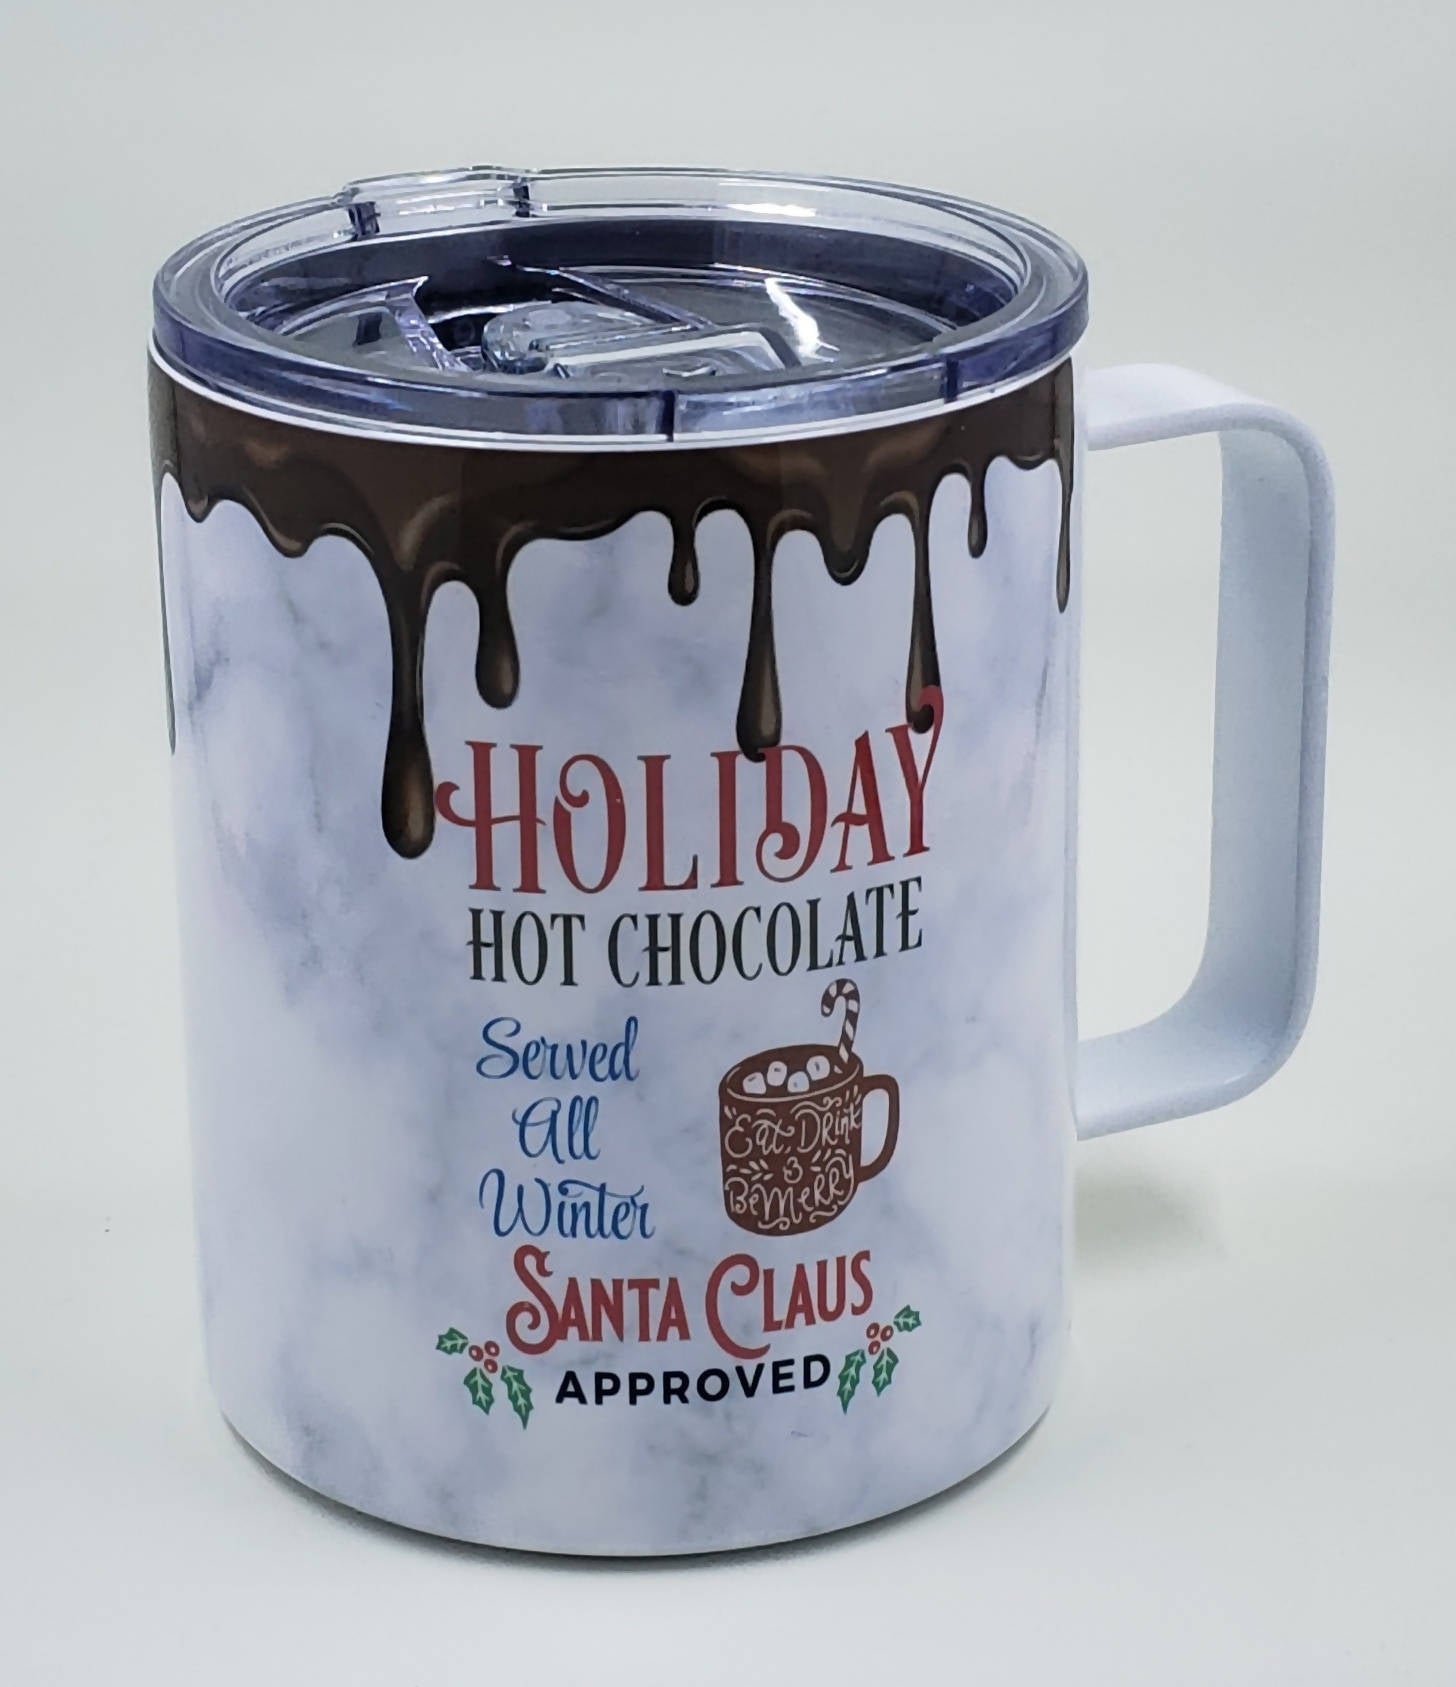 12oz. Stainless Coffee Mug with Lid - Holiday Hot Chocolate